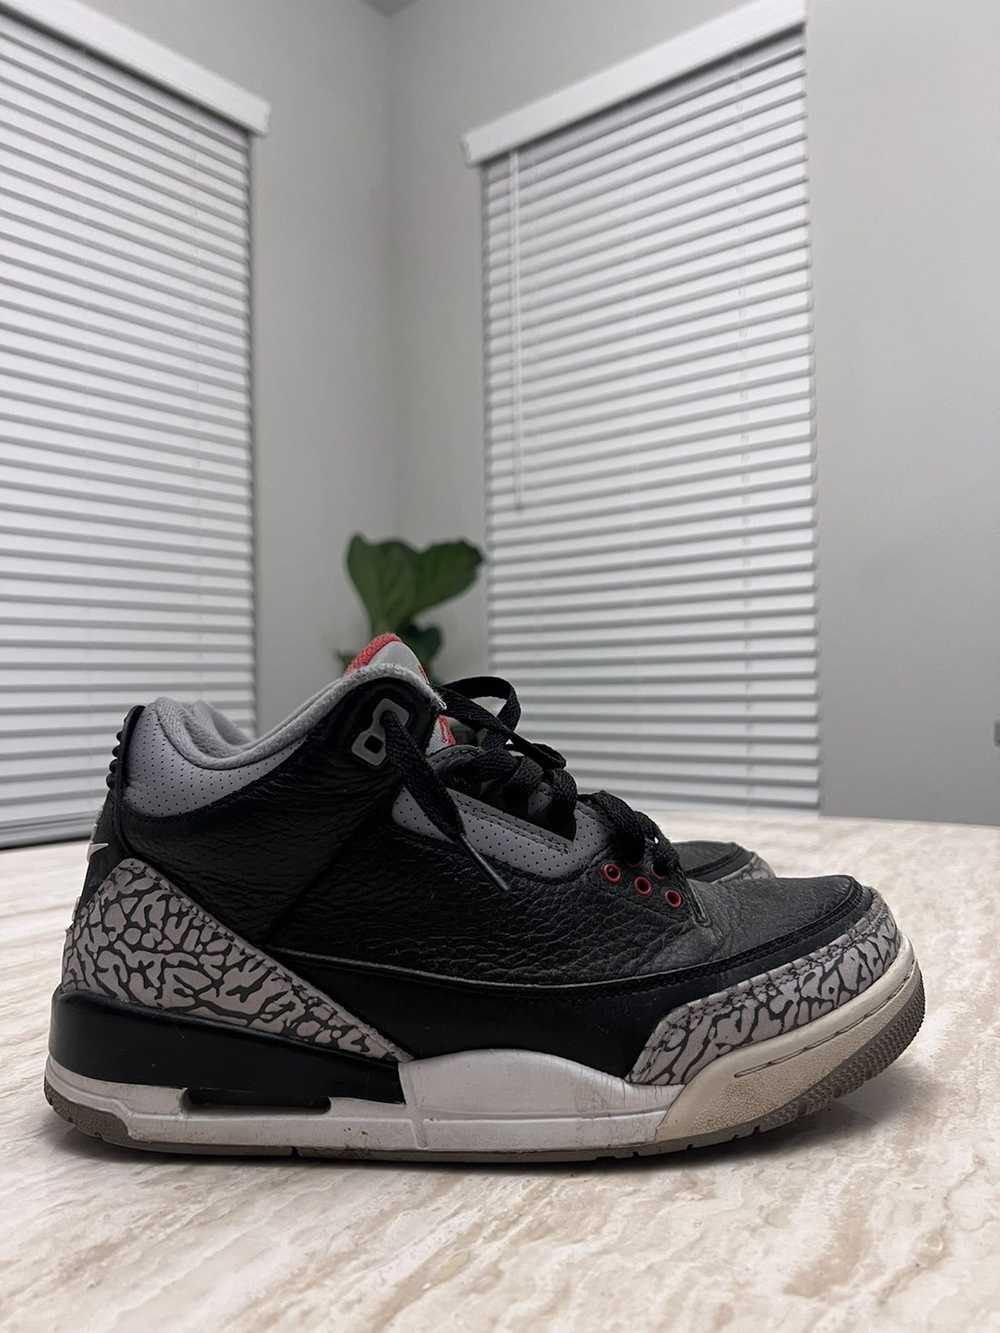 Jordan Brand Black cement 3 - image 2